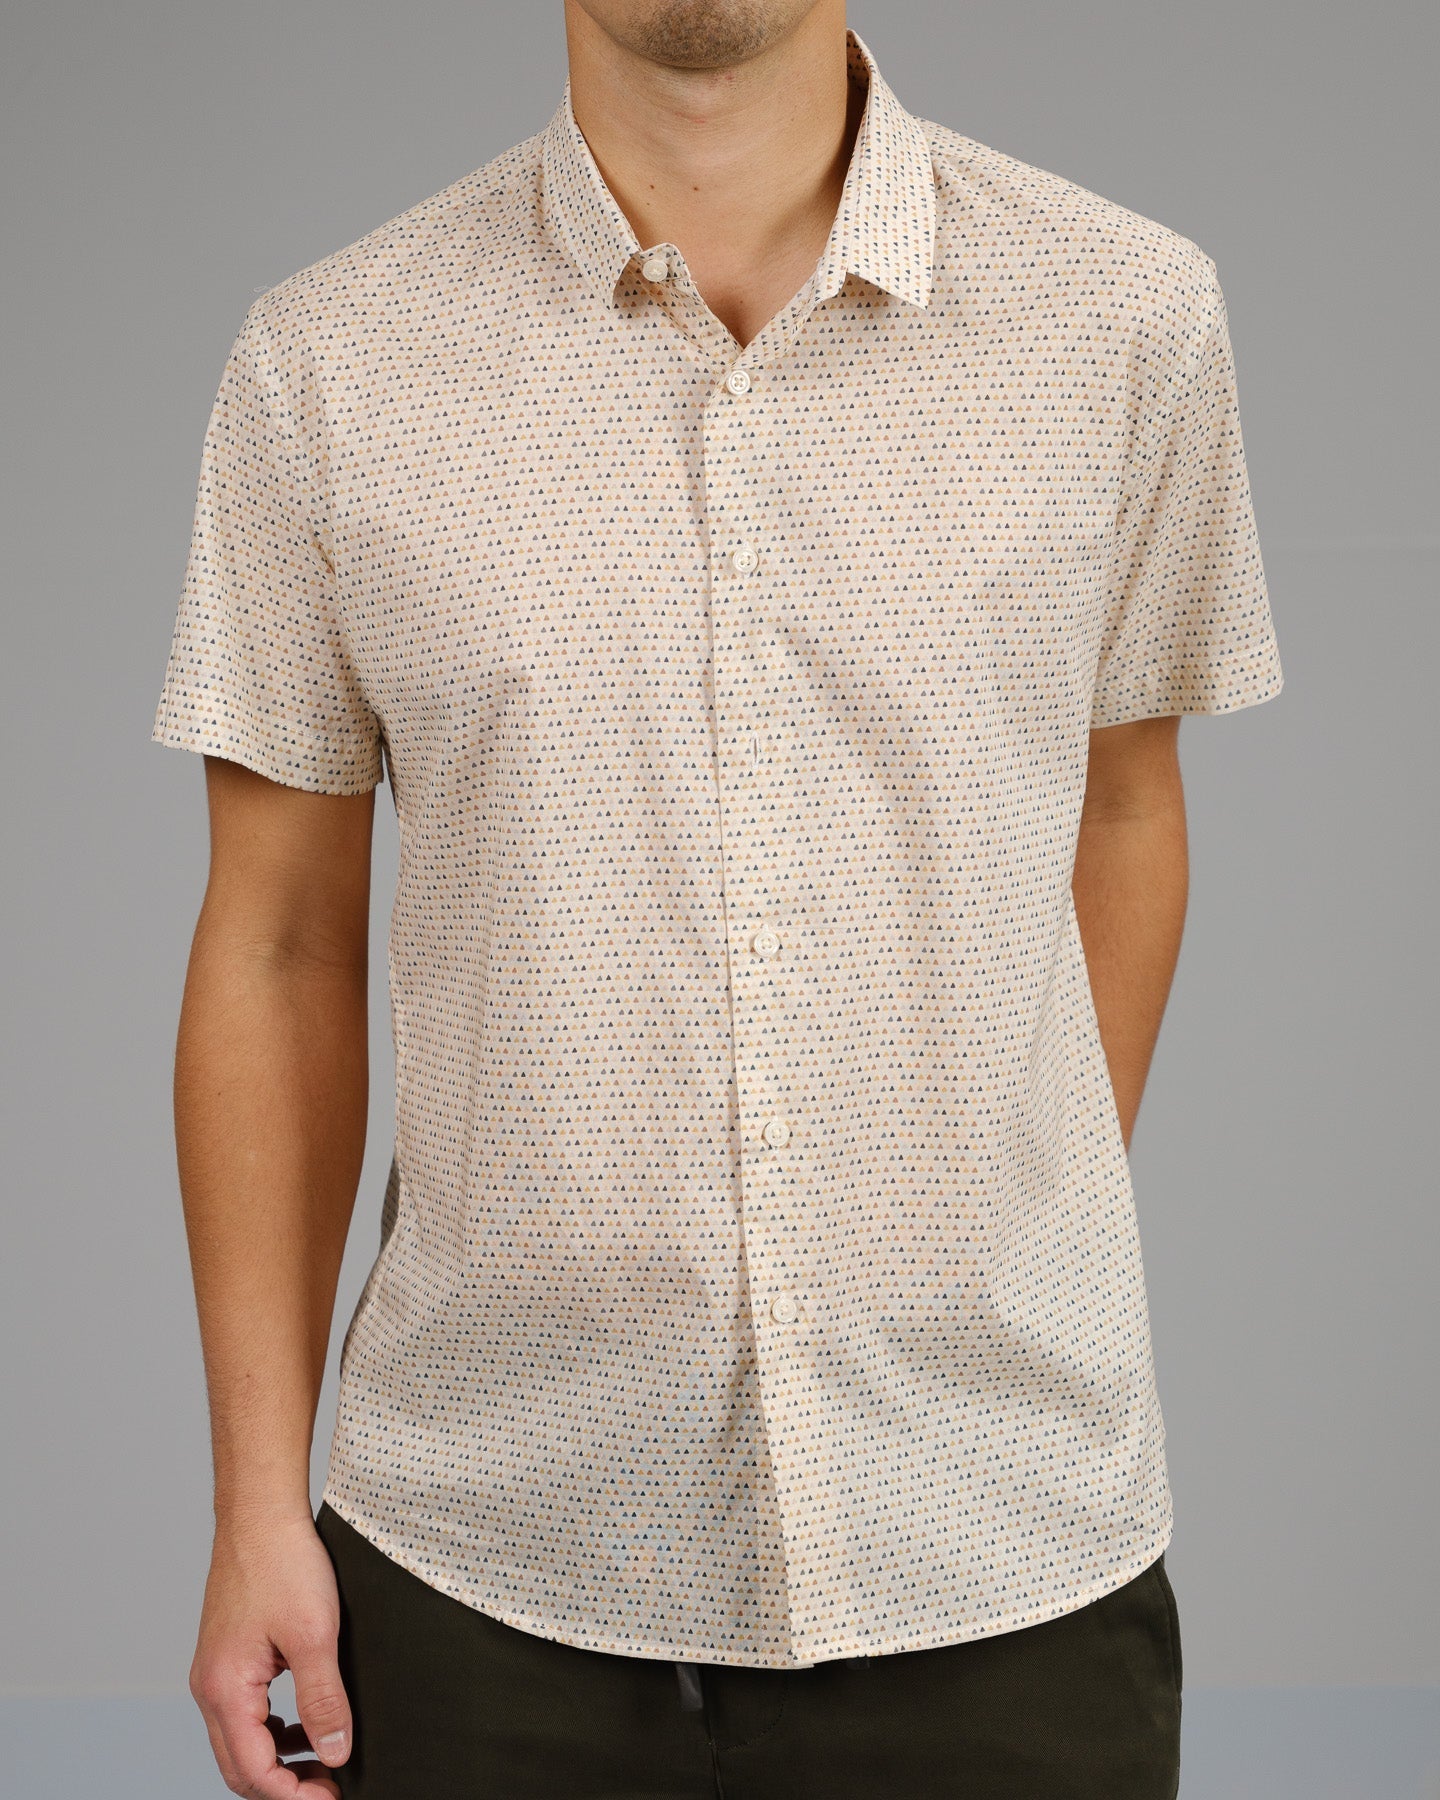 Triad Short Sleeve 100% Printed Cotton Shirt